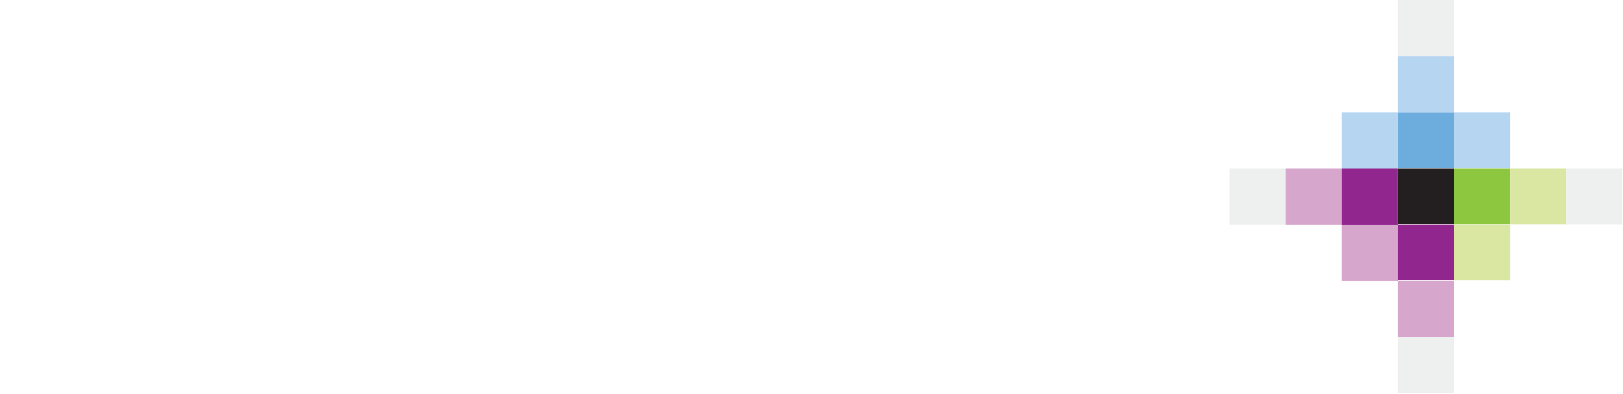 Volaris
 logo large for dark backgrounds (transparent PNG)